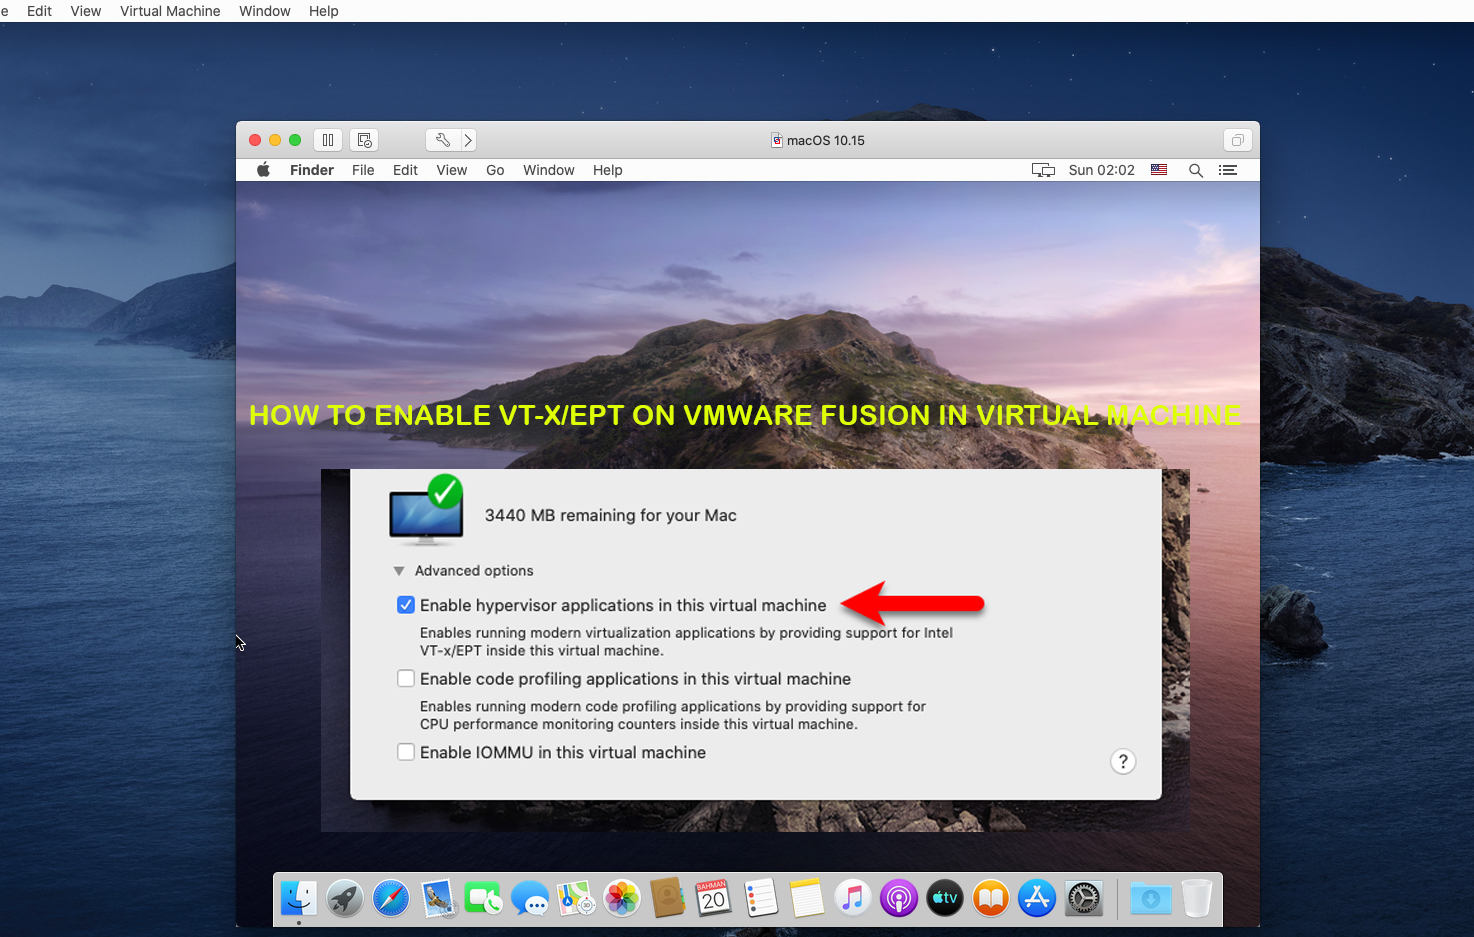 download windows 10 for mac for vmware fusion